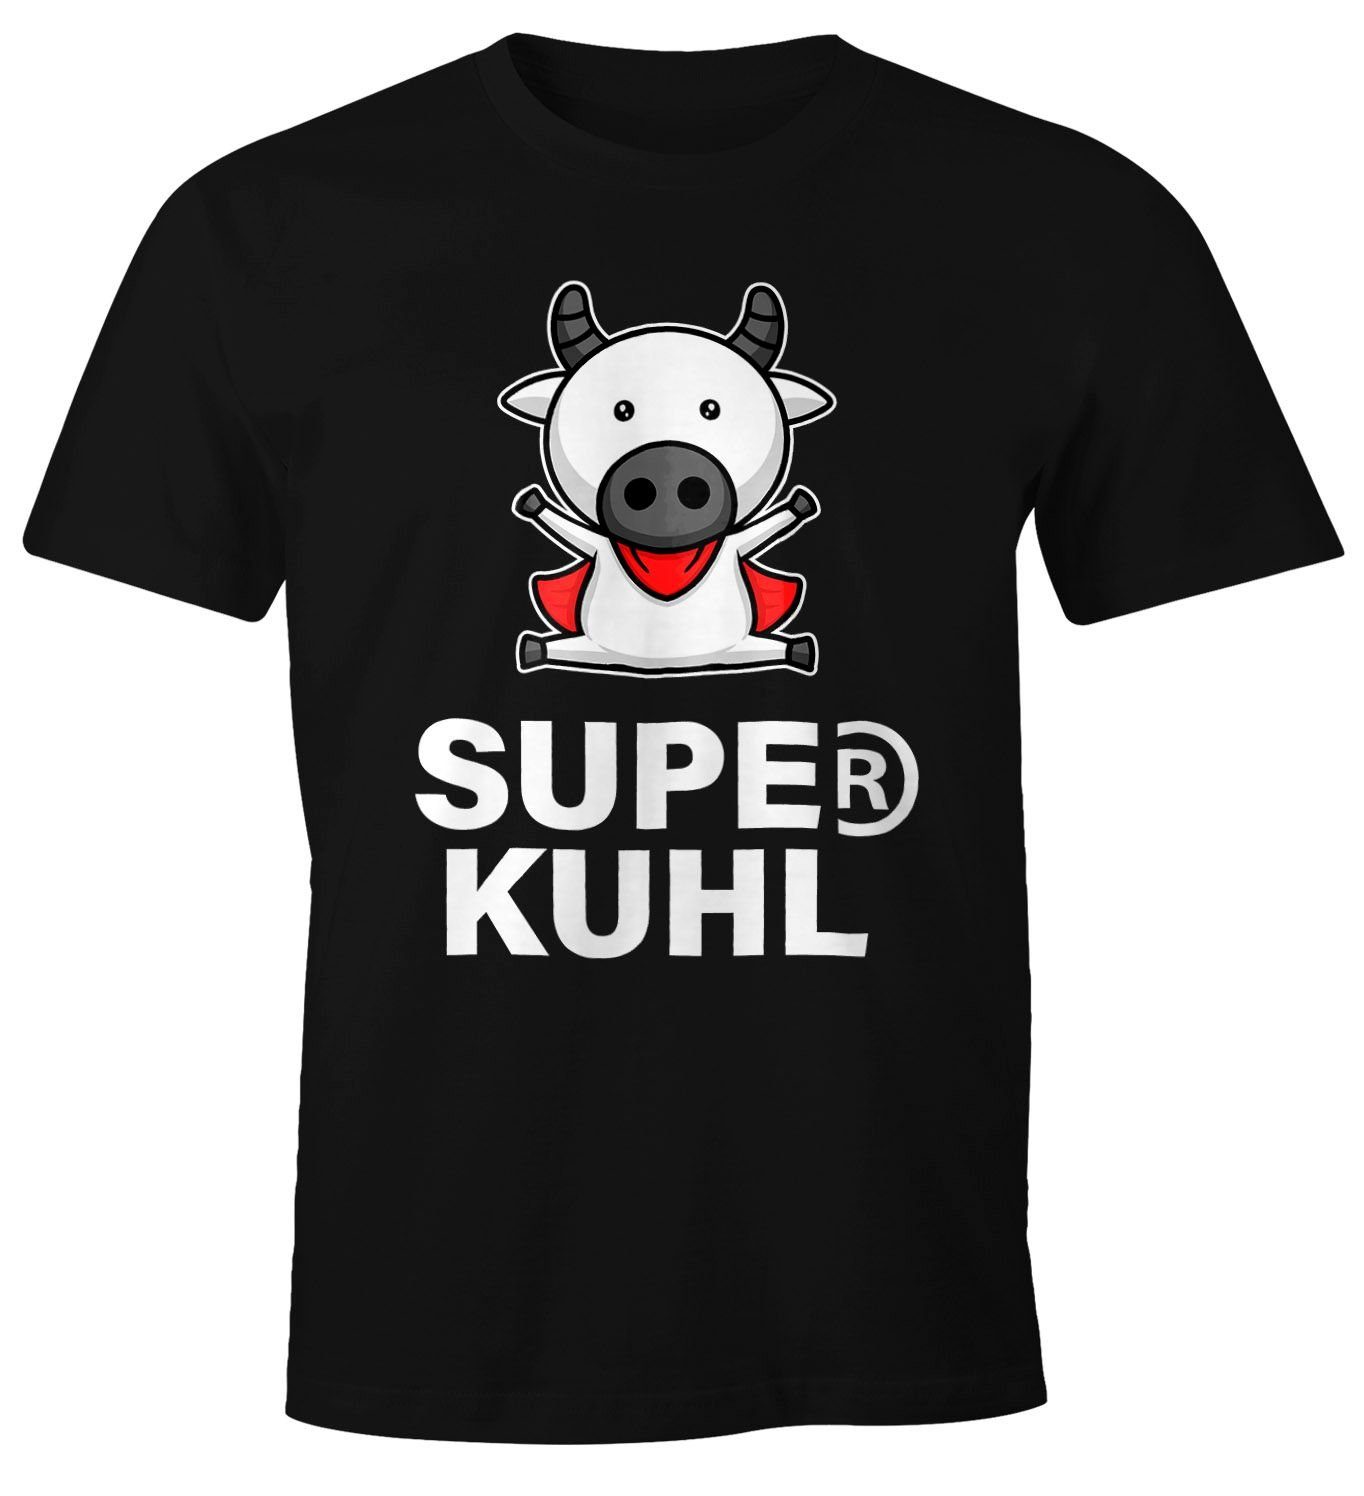 MoonWorks Print-Shirt Lustiges Herren T-Shirt Tier-Motiv Super Kuhl Kuh Fun-Shirt Moonworks® mit Print schwarz